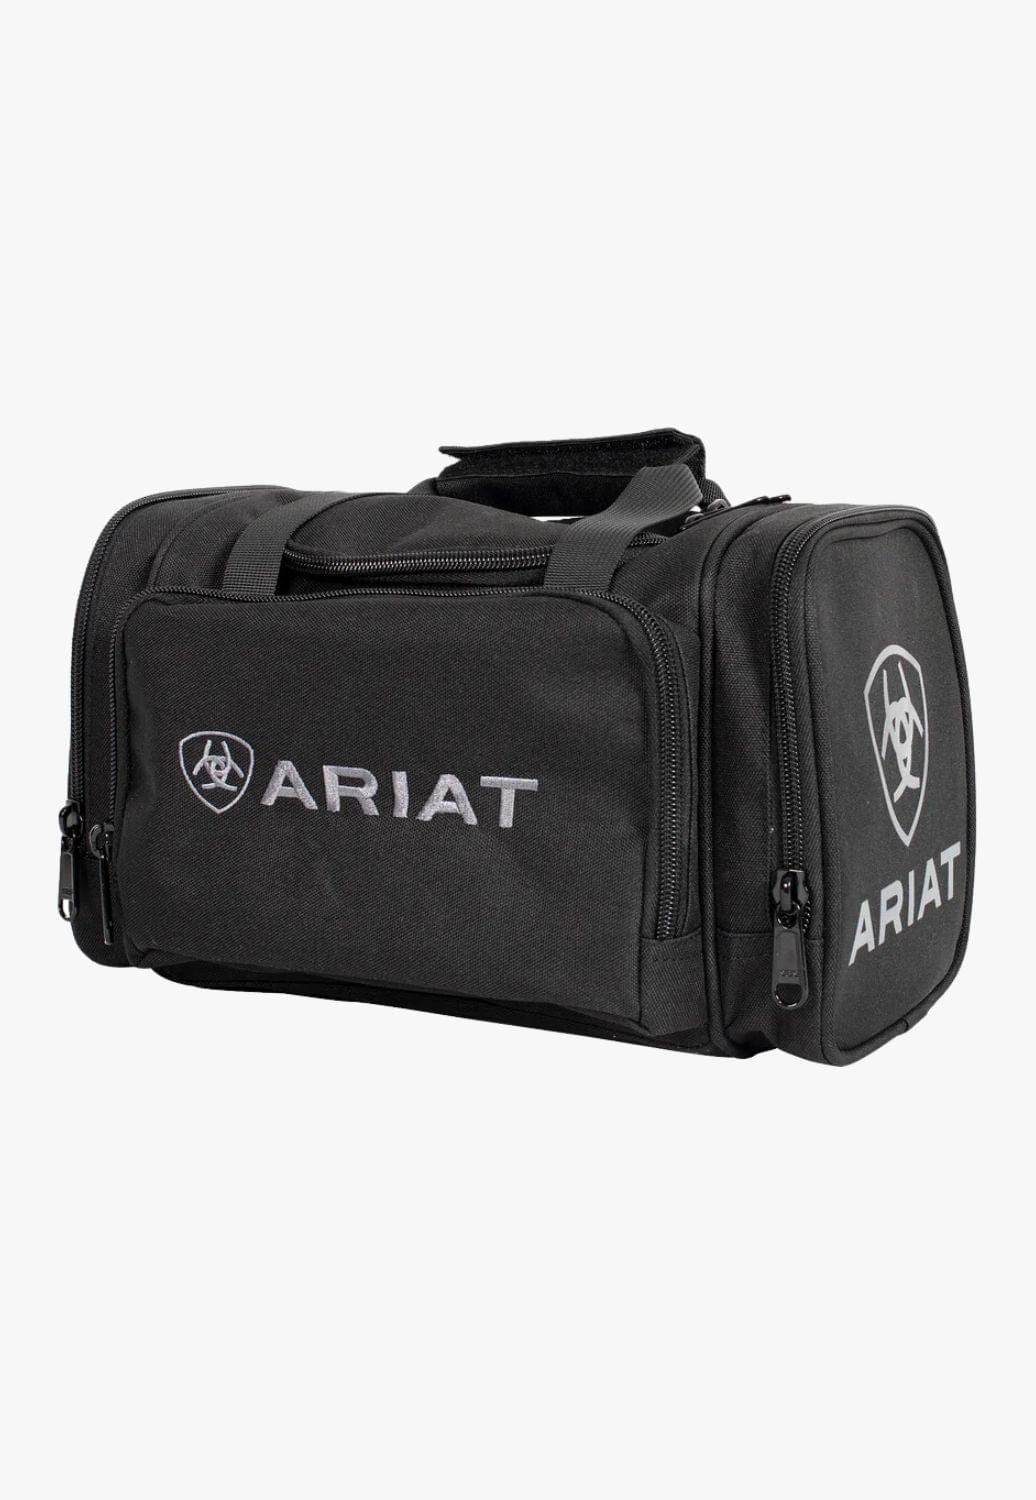 Ariat TRAVEL - Toilet Bags Black Ariat Vanity Bag